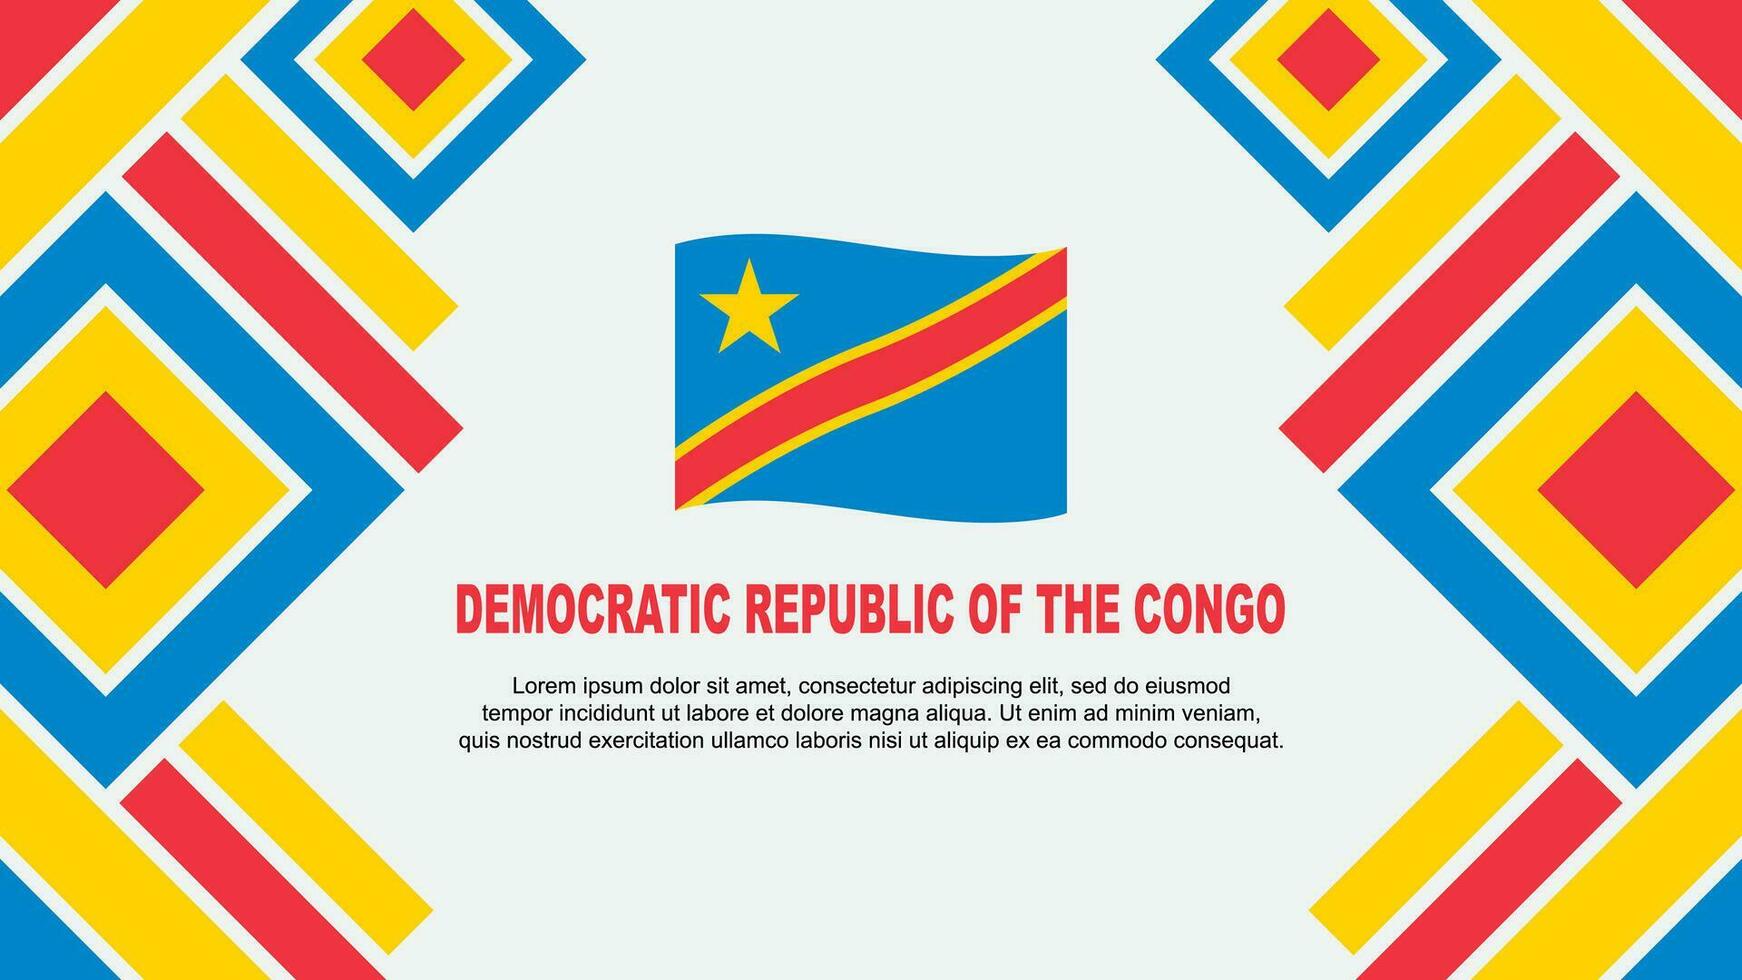 demokratisk republik av de kongo flagga abstrakt bakgrund design mall. demokratisk republik av de kongo oberoende dag baner tapet vektor illustration